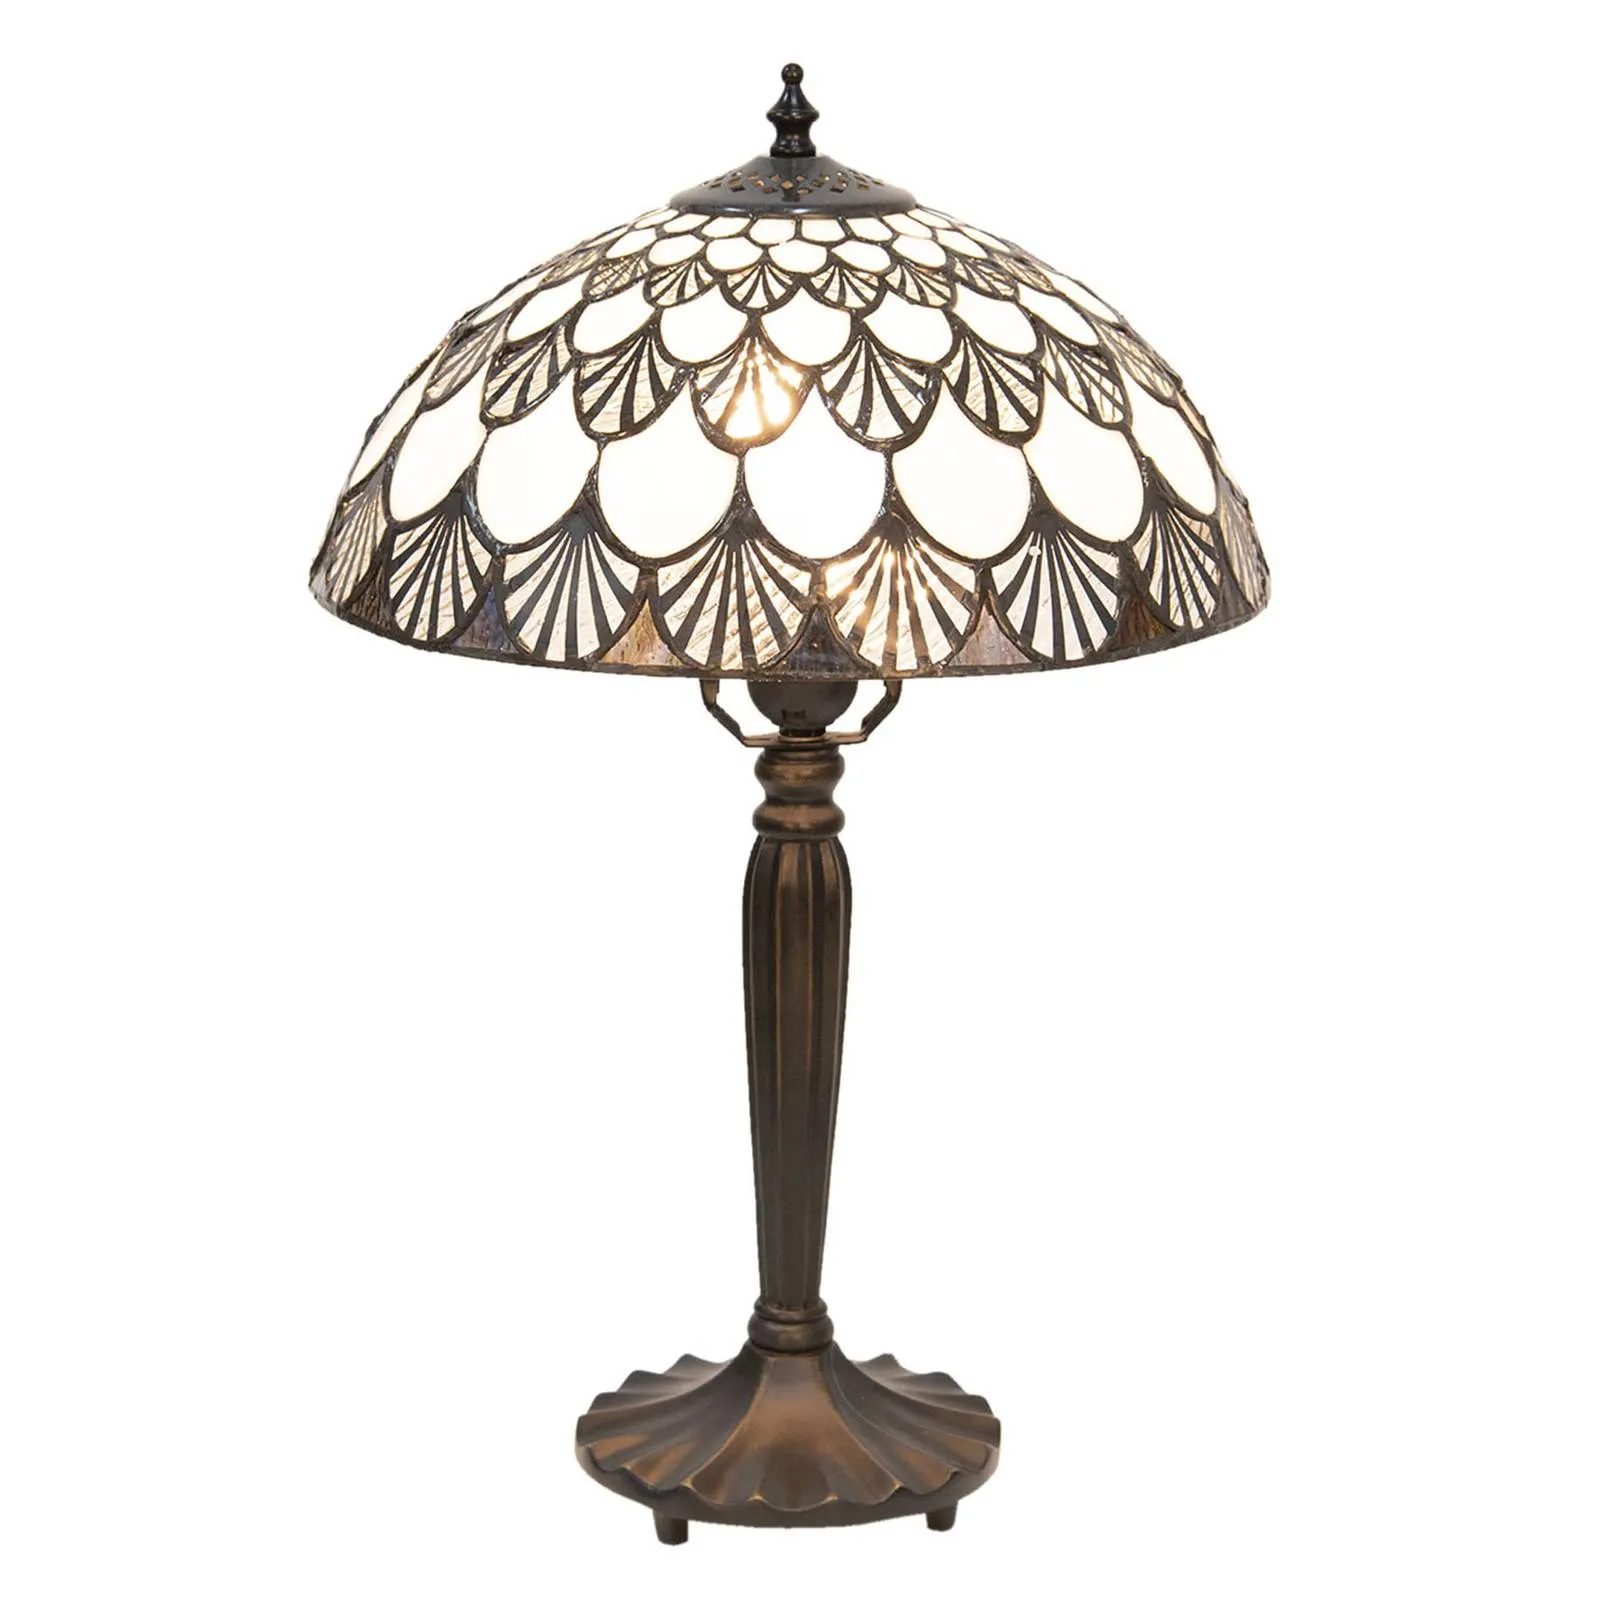 5998 table lamp, shell pattern, Tiffany look